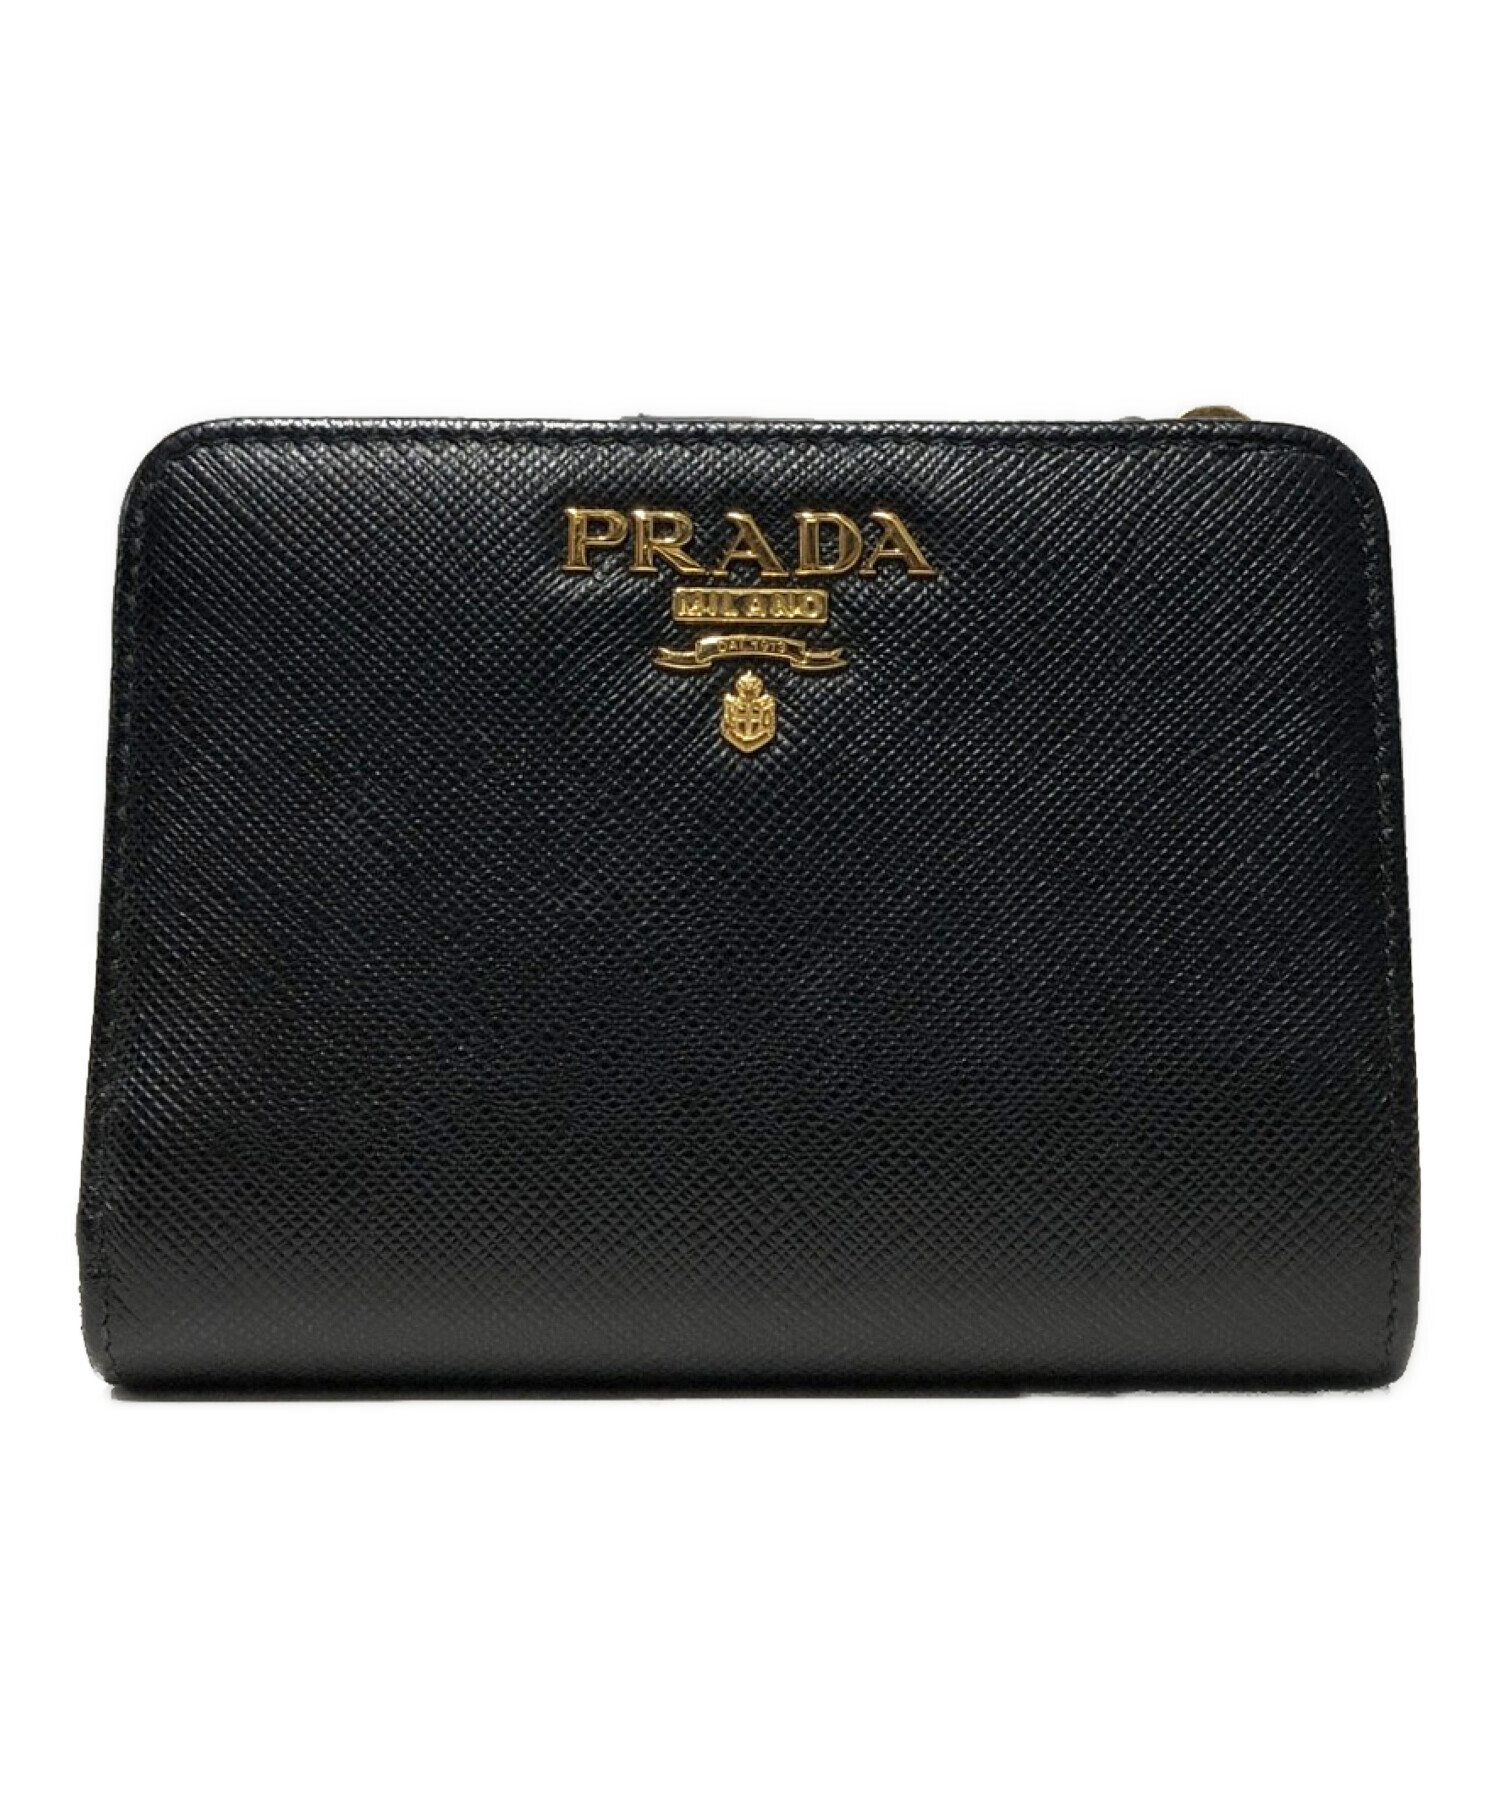 PRADA プラダ 財布 二つ折り ブラック レザー - 小物